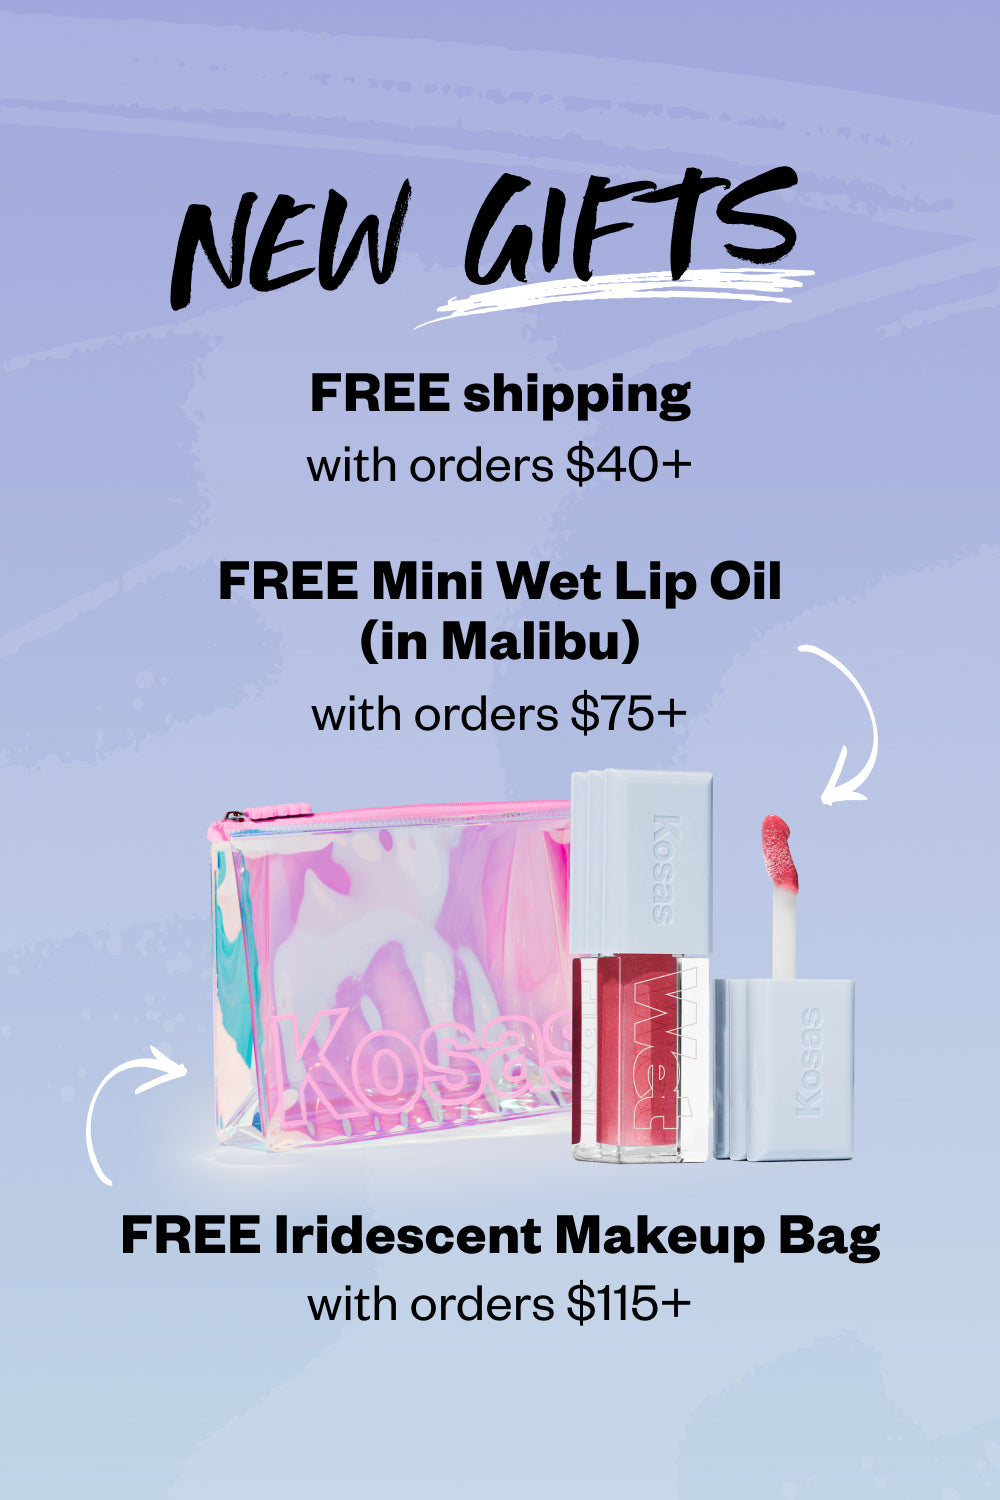 Free Mini Wet Lip Oil in Malibu and Iridescent Makeup Bag